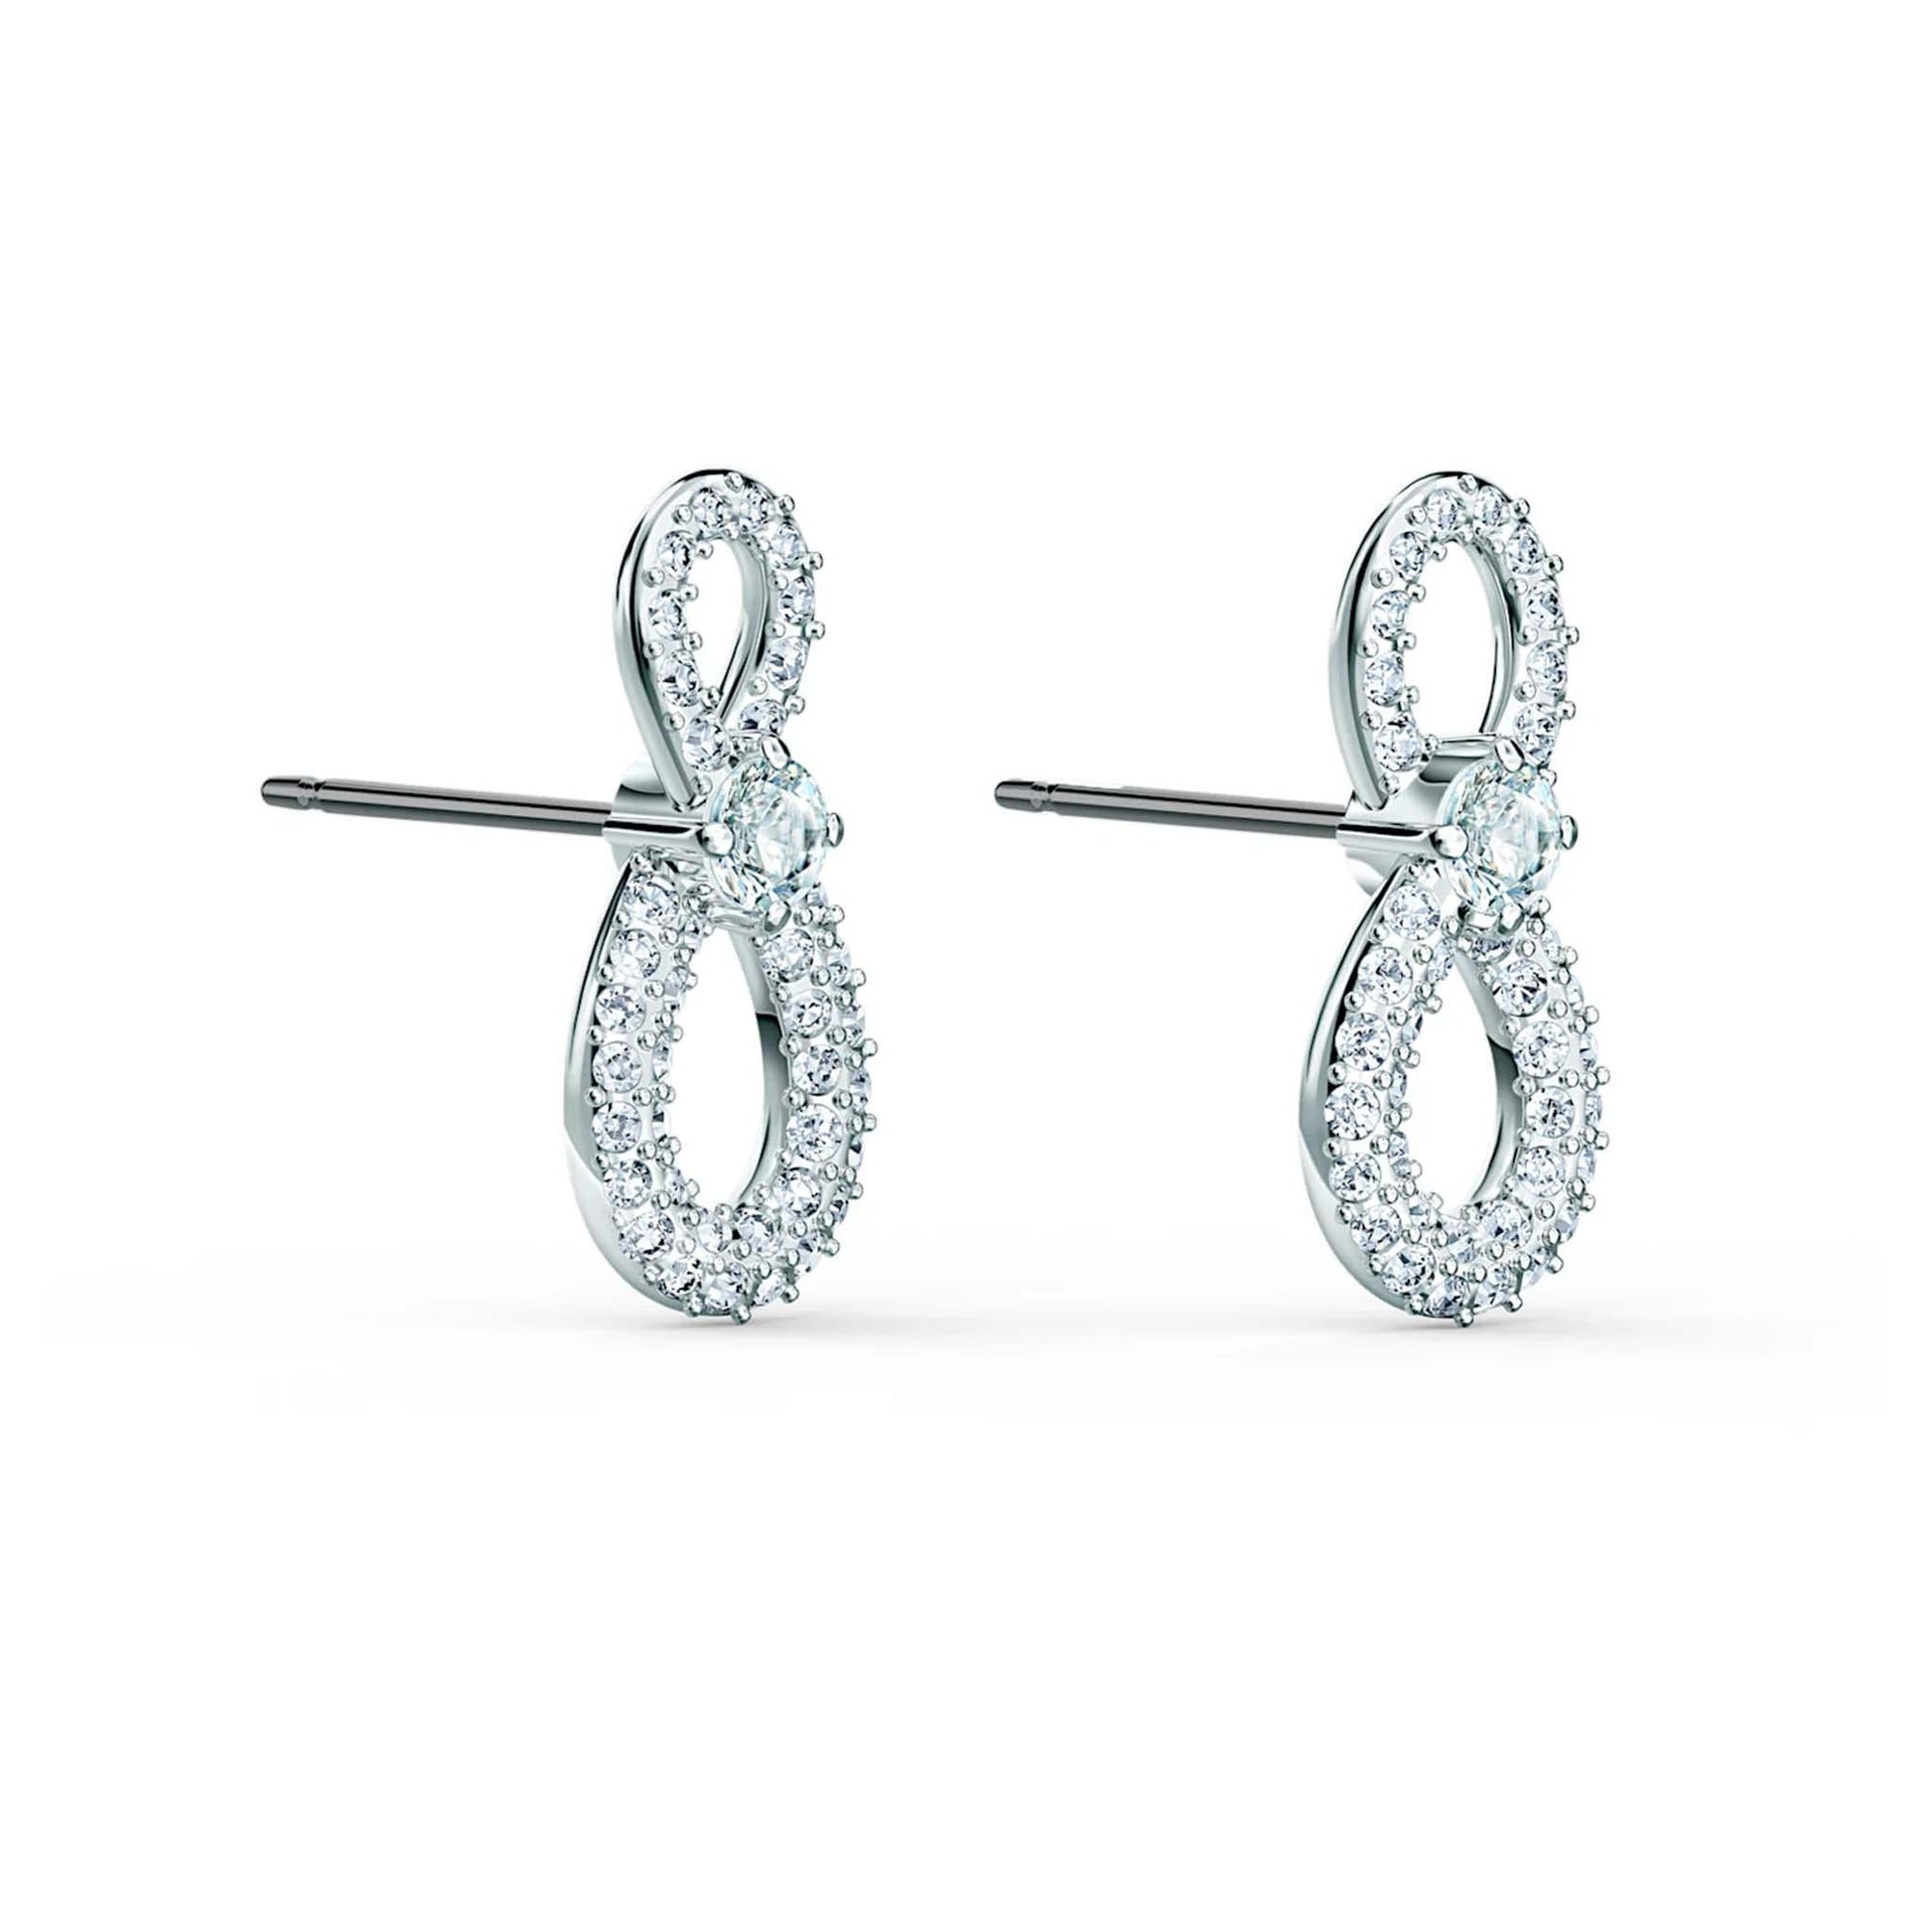 Swarovski Infinity earrings - Cosmos Boutique New Jersey